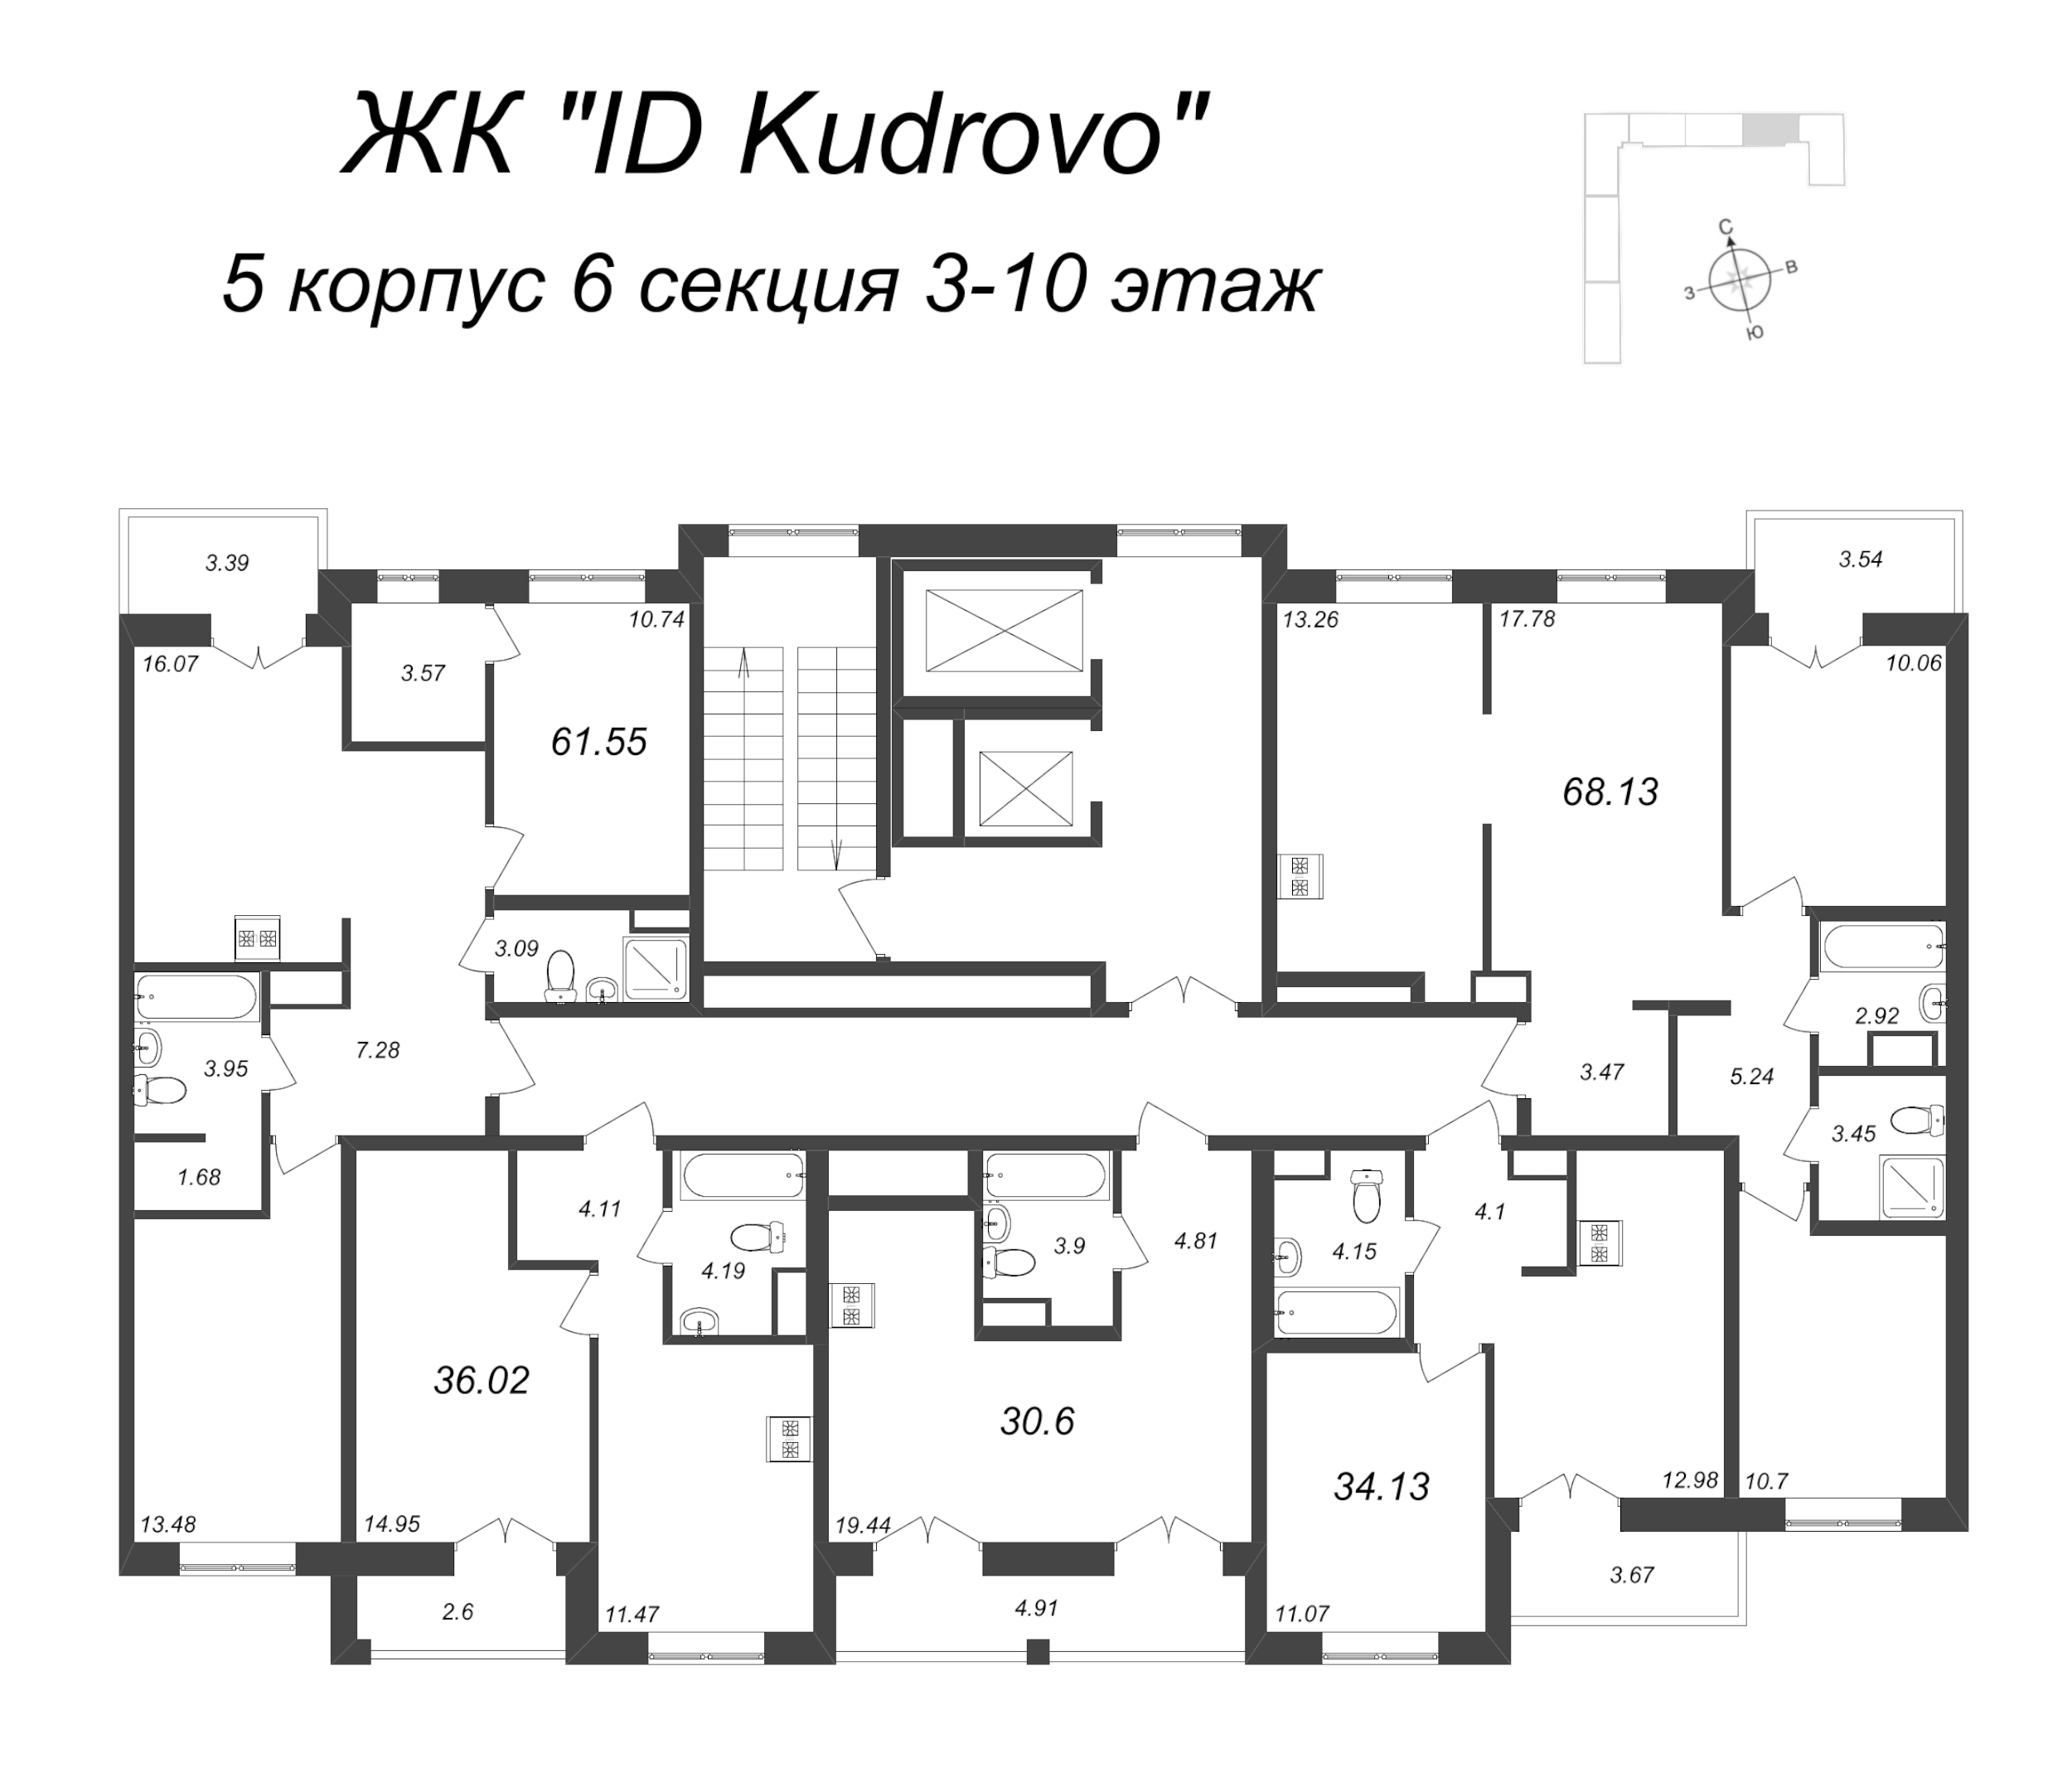 1-комнатная квартира, 36.02 м² в ЖК "ID Kudrovo" - планировка этажа